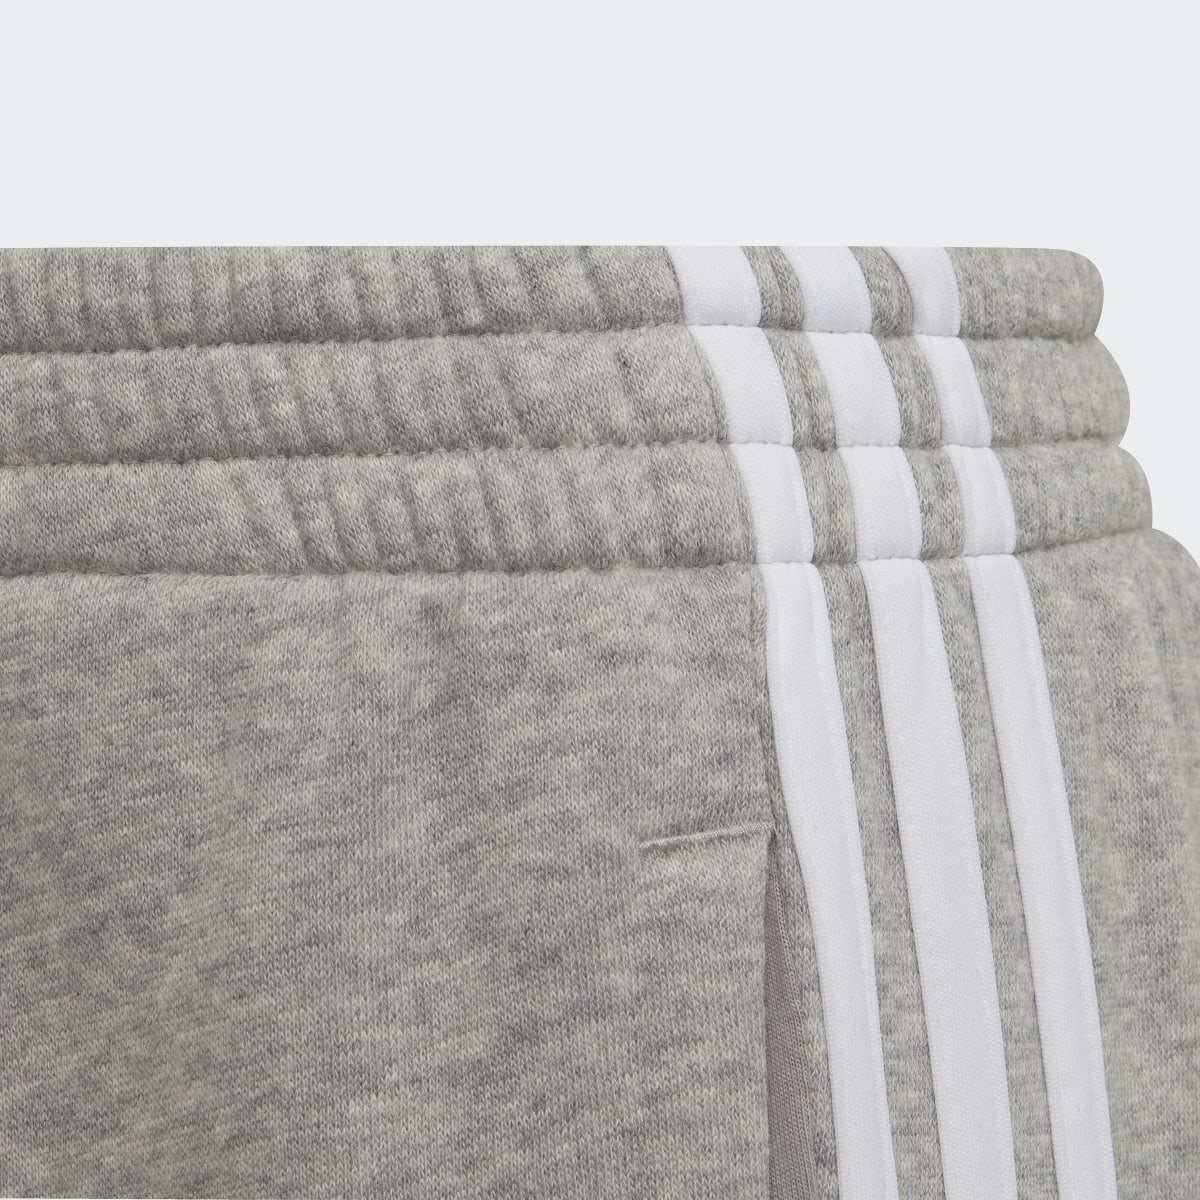 Adidas Essentials 3-Stripes Pants. 4